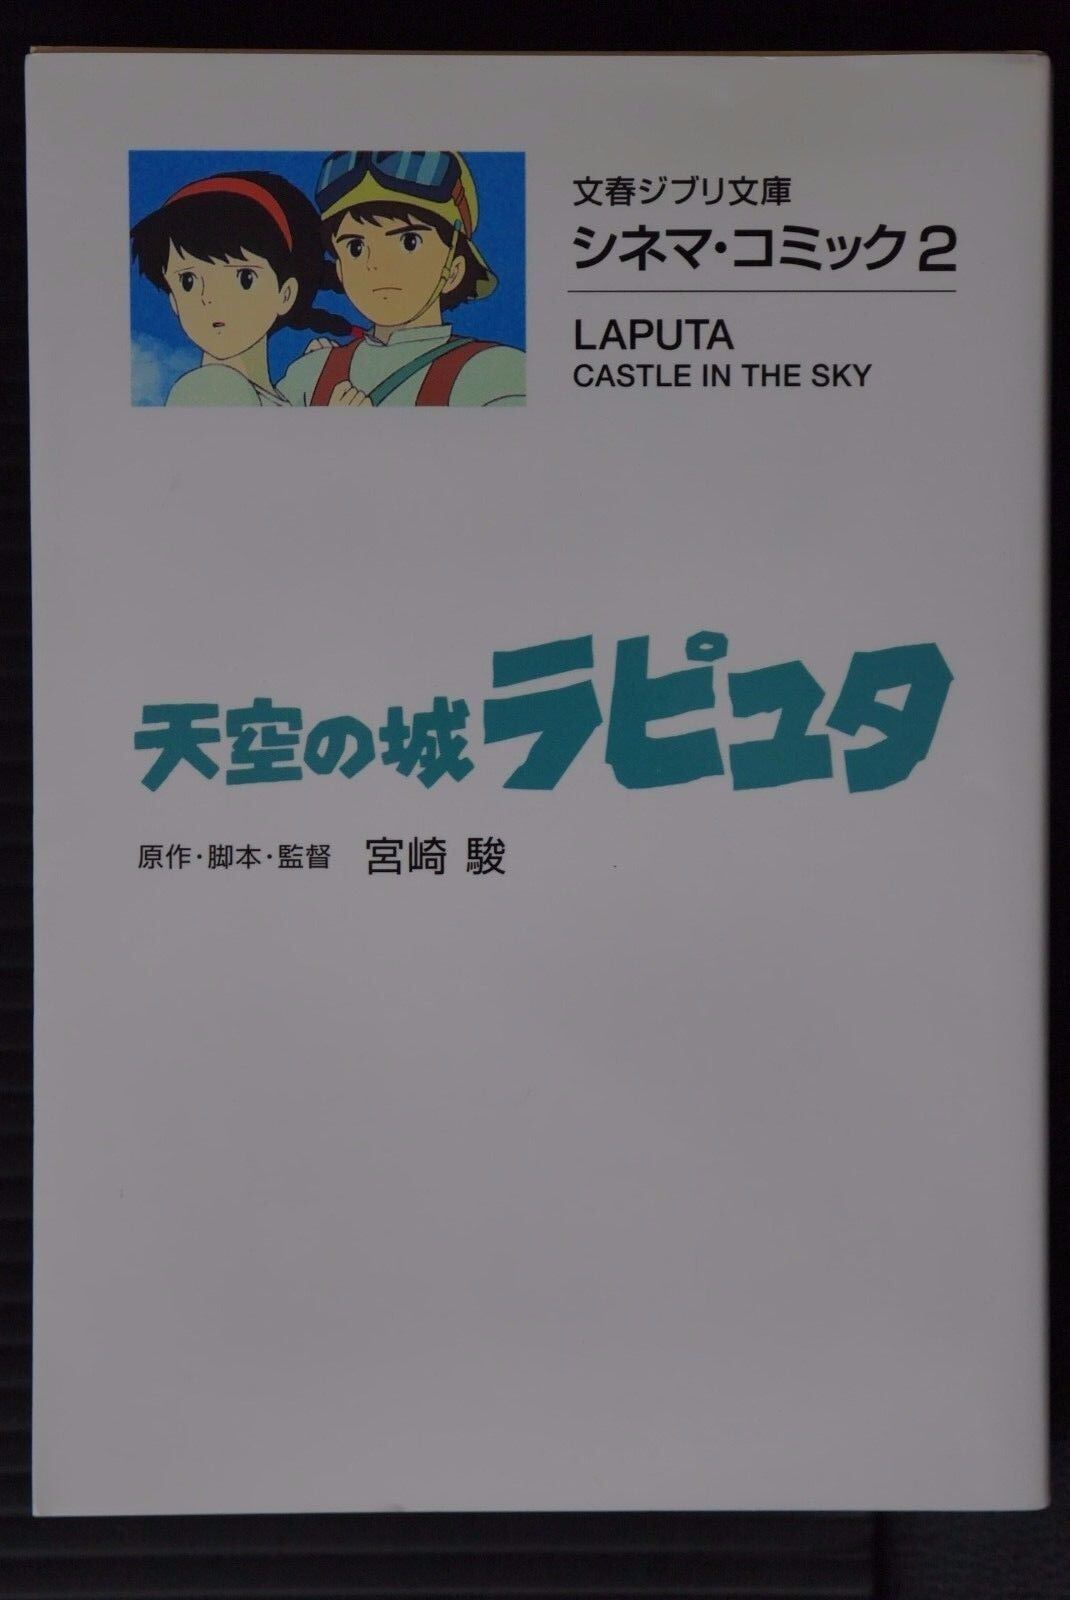 JAPAN Studio Ghibli Cinema Comic #2 Laputa: Castle in the Sky